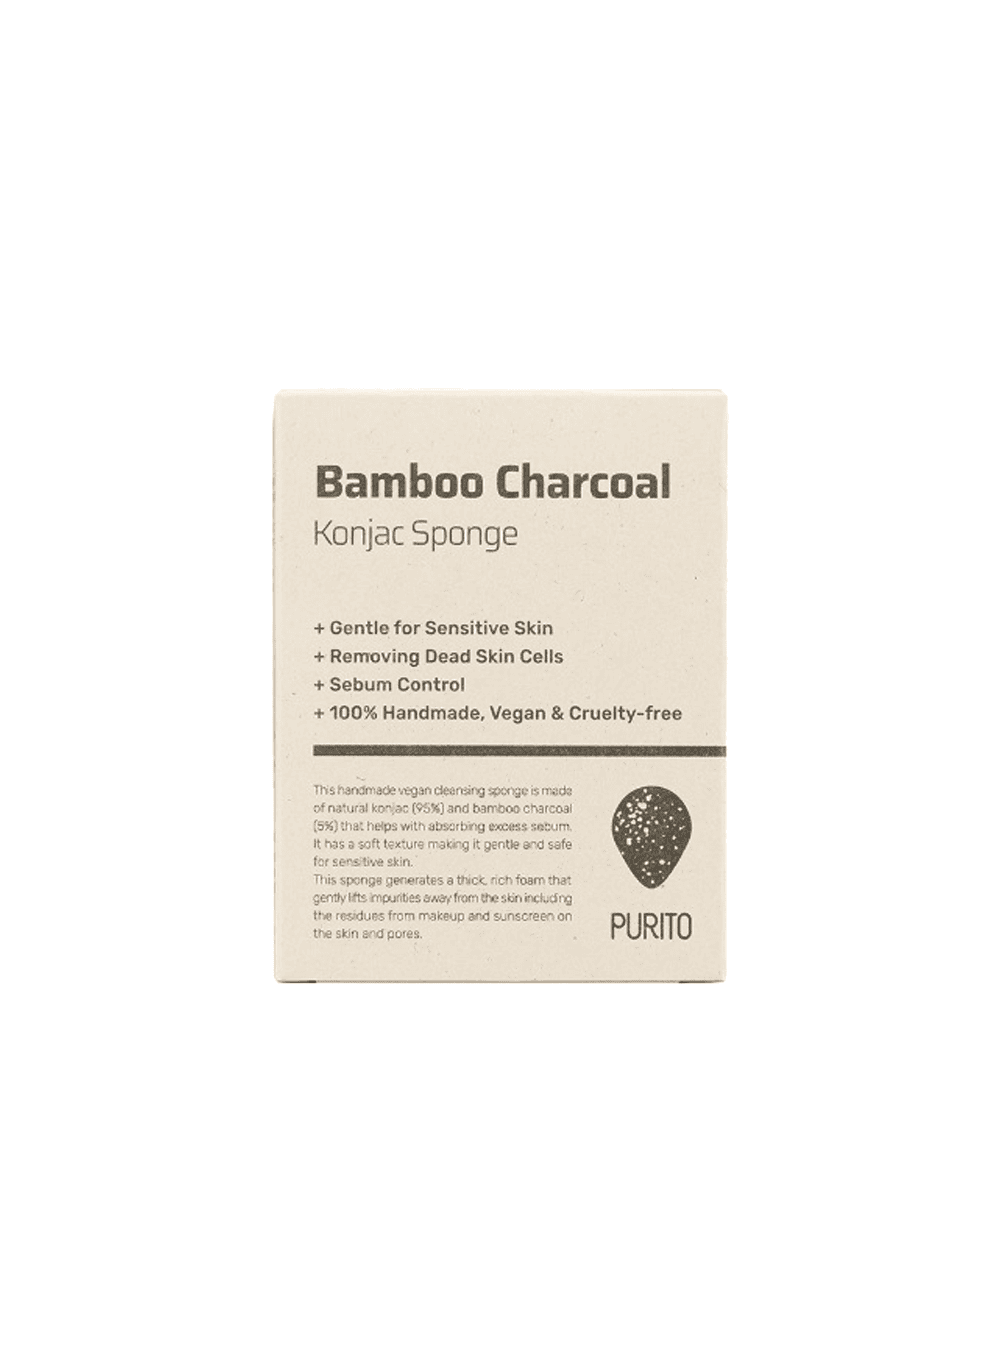 Bamboo Charcoal Konjac Sponge (7g)